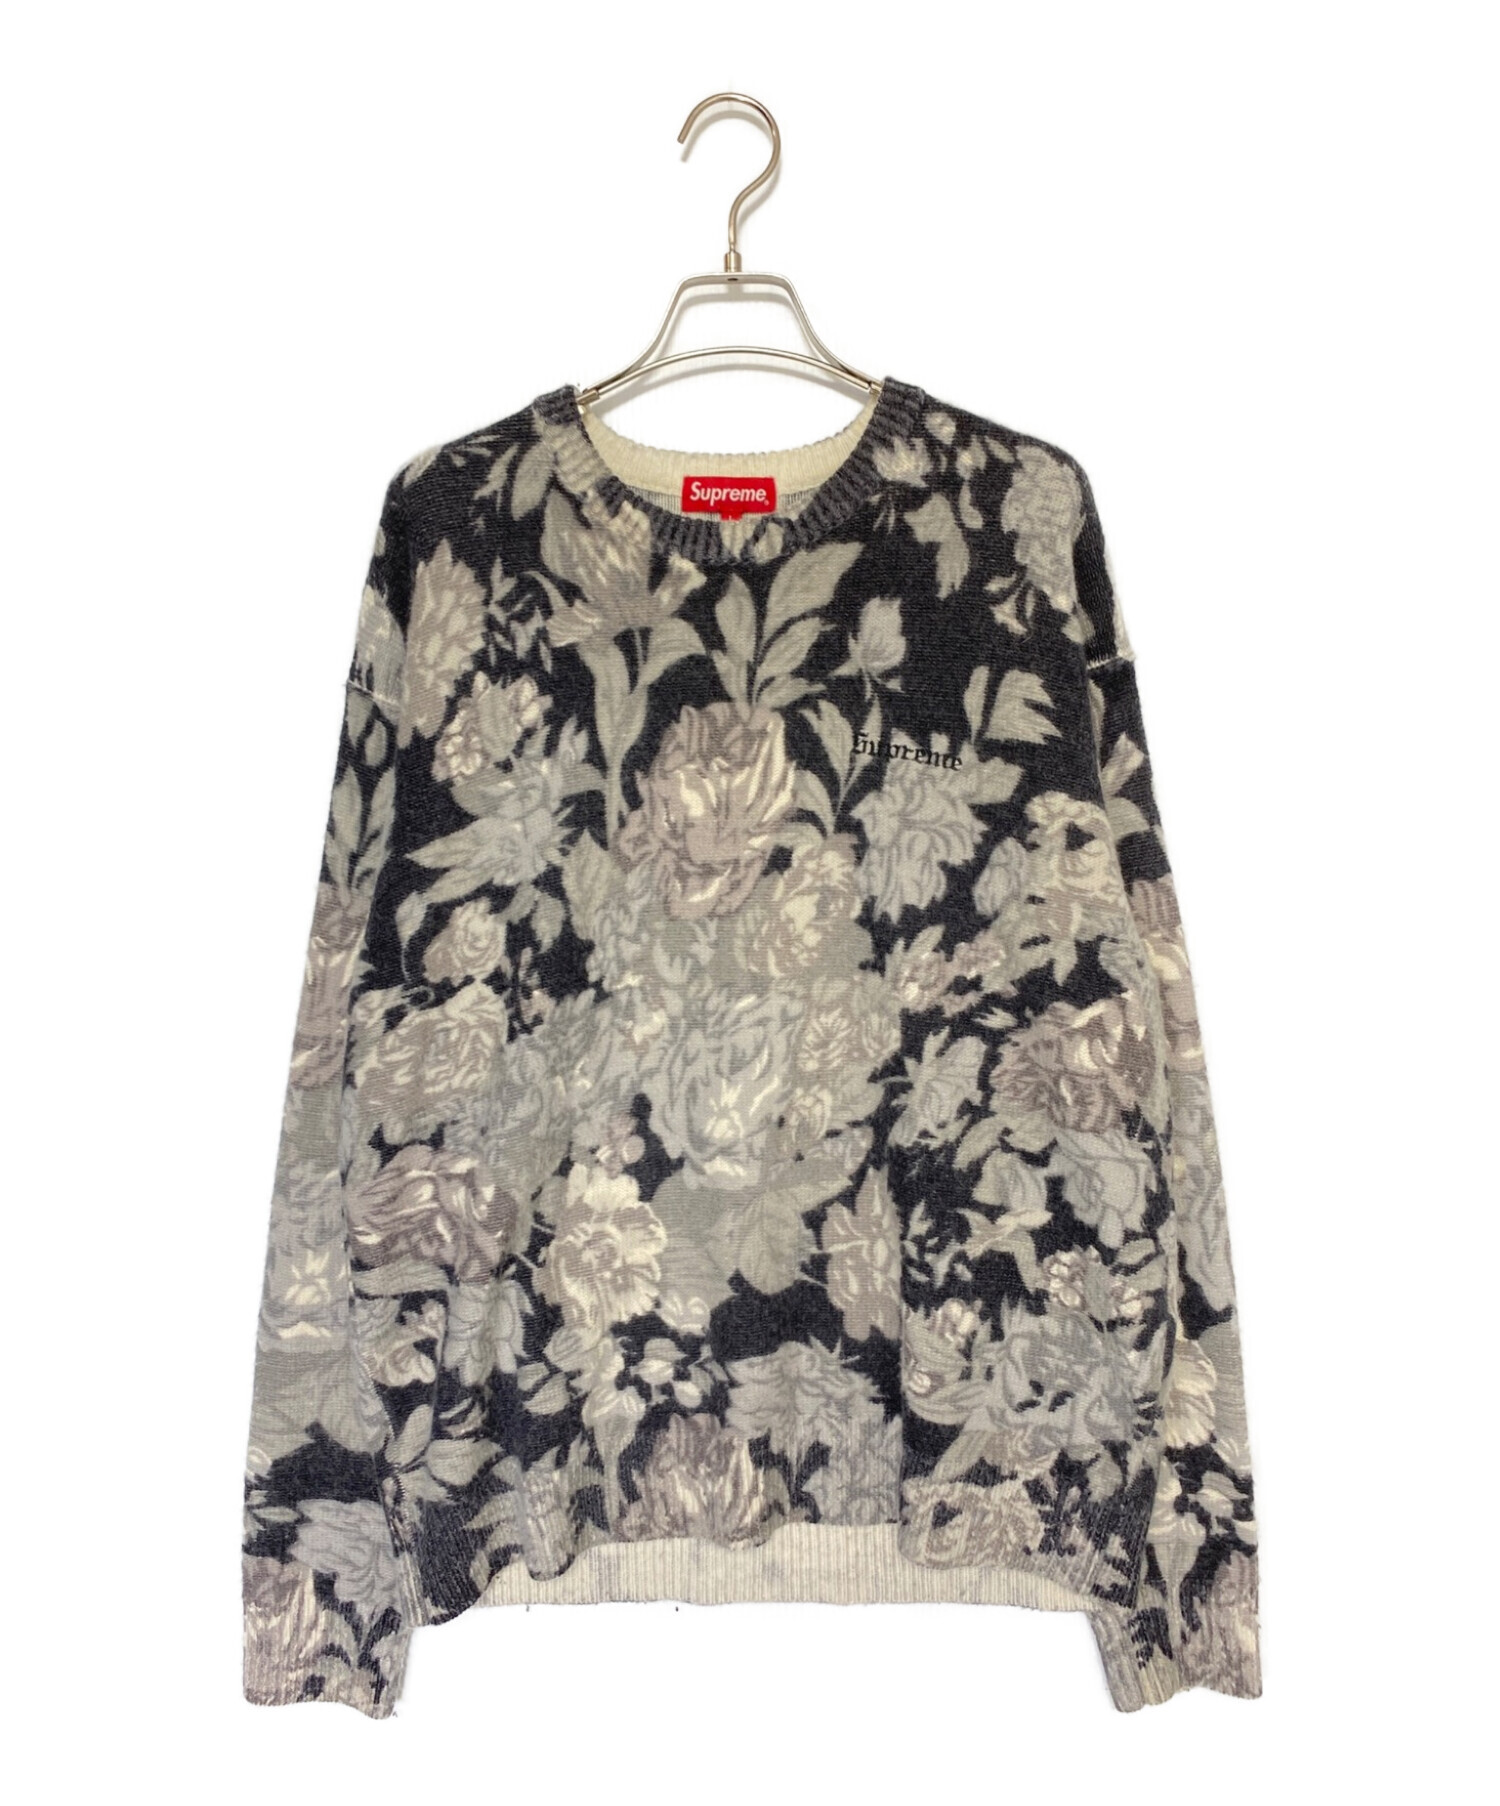 supreme Printed Floral Angora Sweater